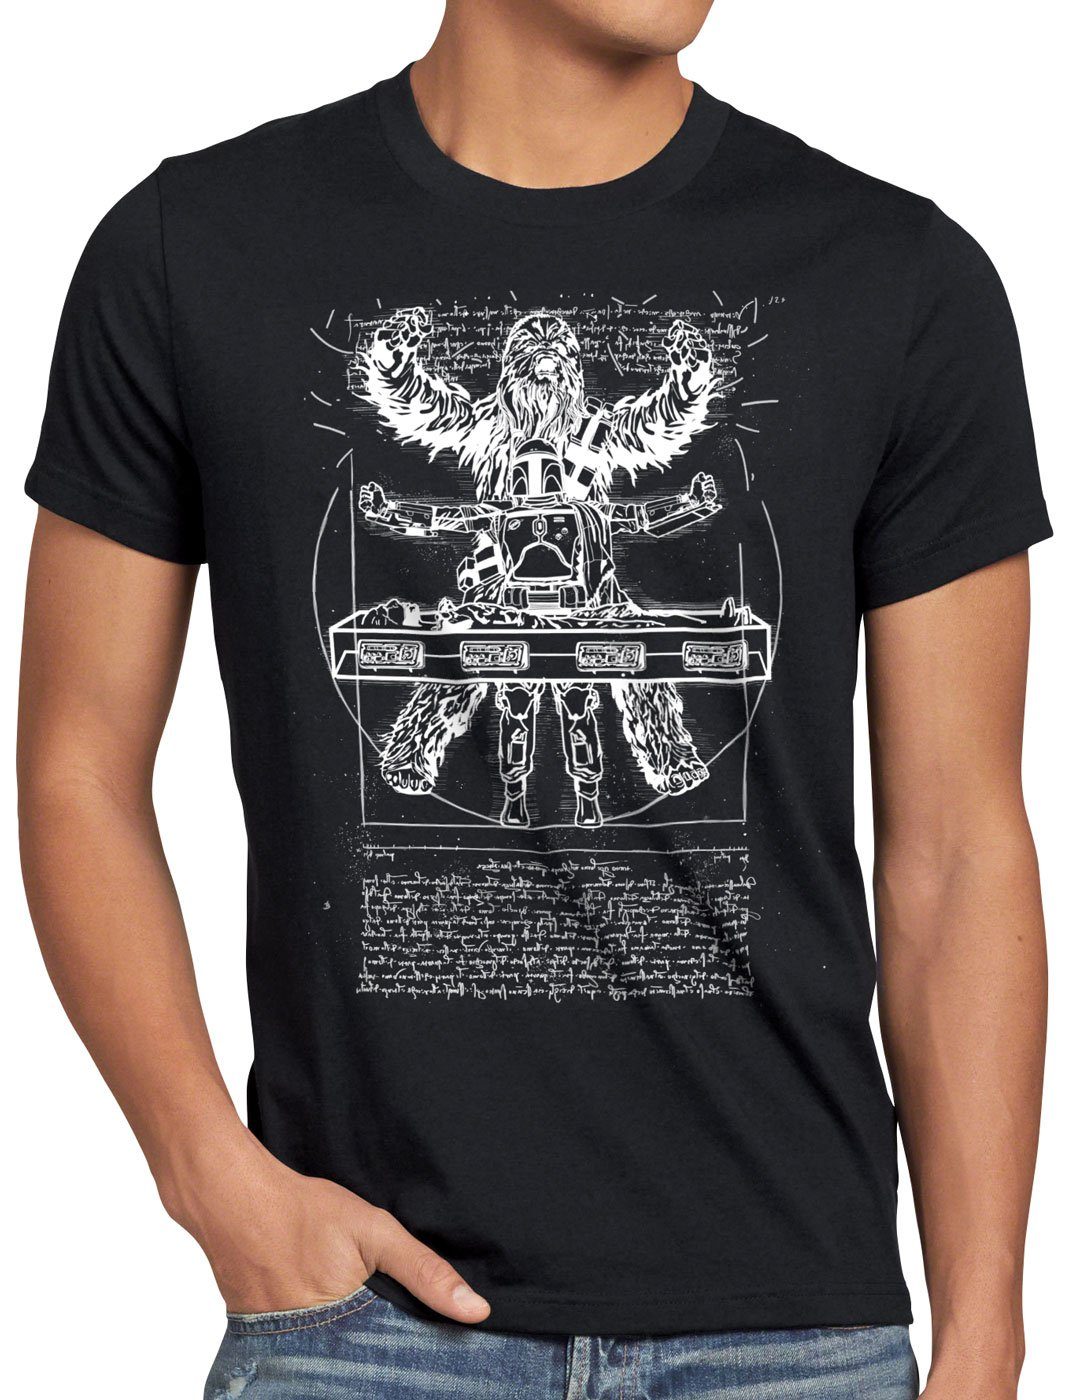 style3 Print-Shirt Herren T-Shirt fett Wookiee schwarz Vitruvianischer mandalorian boba